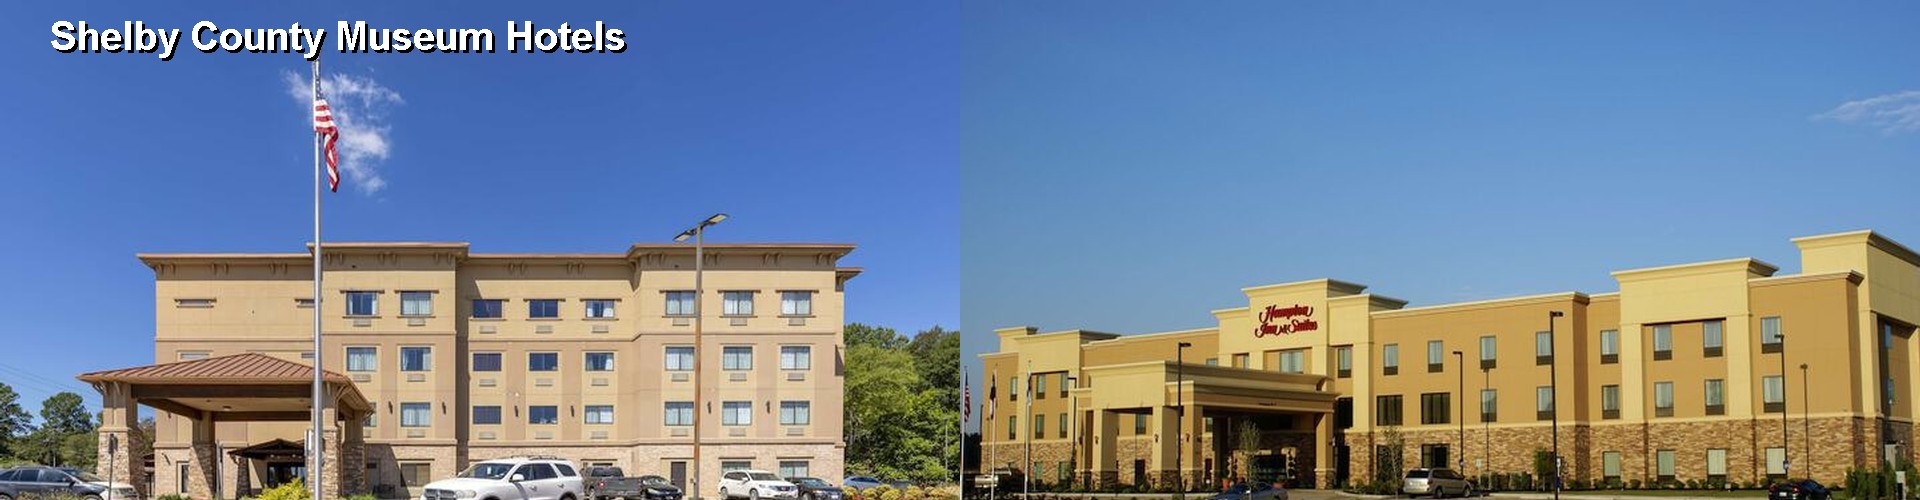 5 Best Hotels near Shelby County Museum